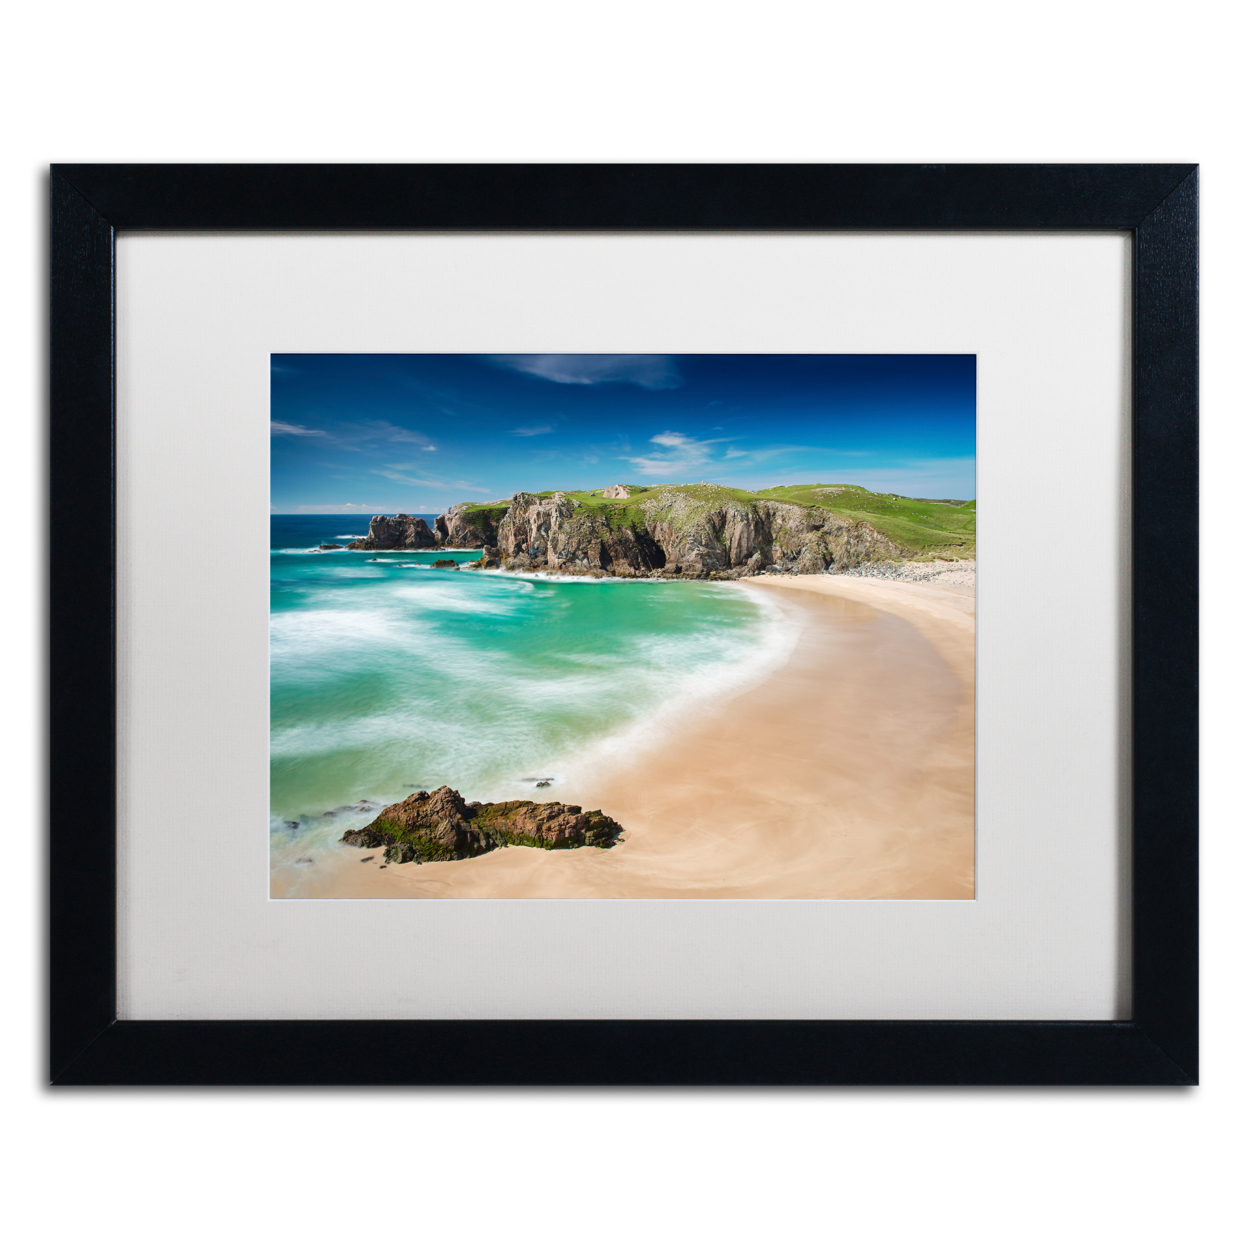 Michael Blanchette Photography 'Beach At Mangersta' Black Wooden Framed Art 18 X 22 Inches